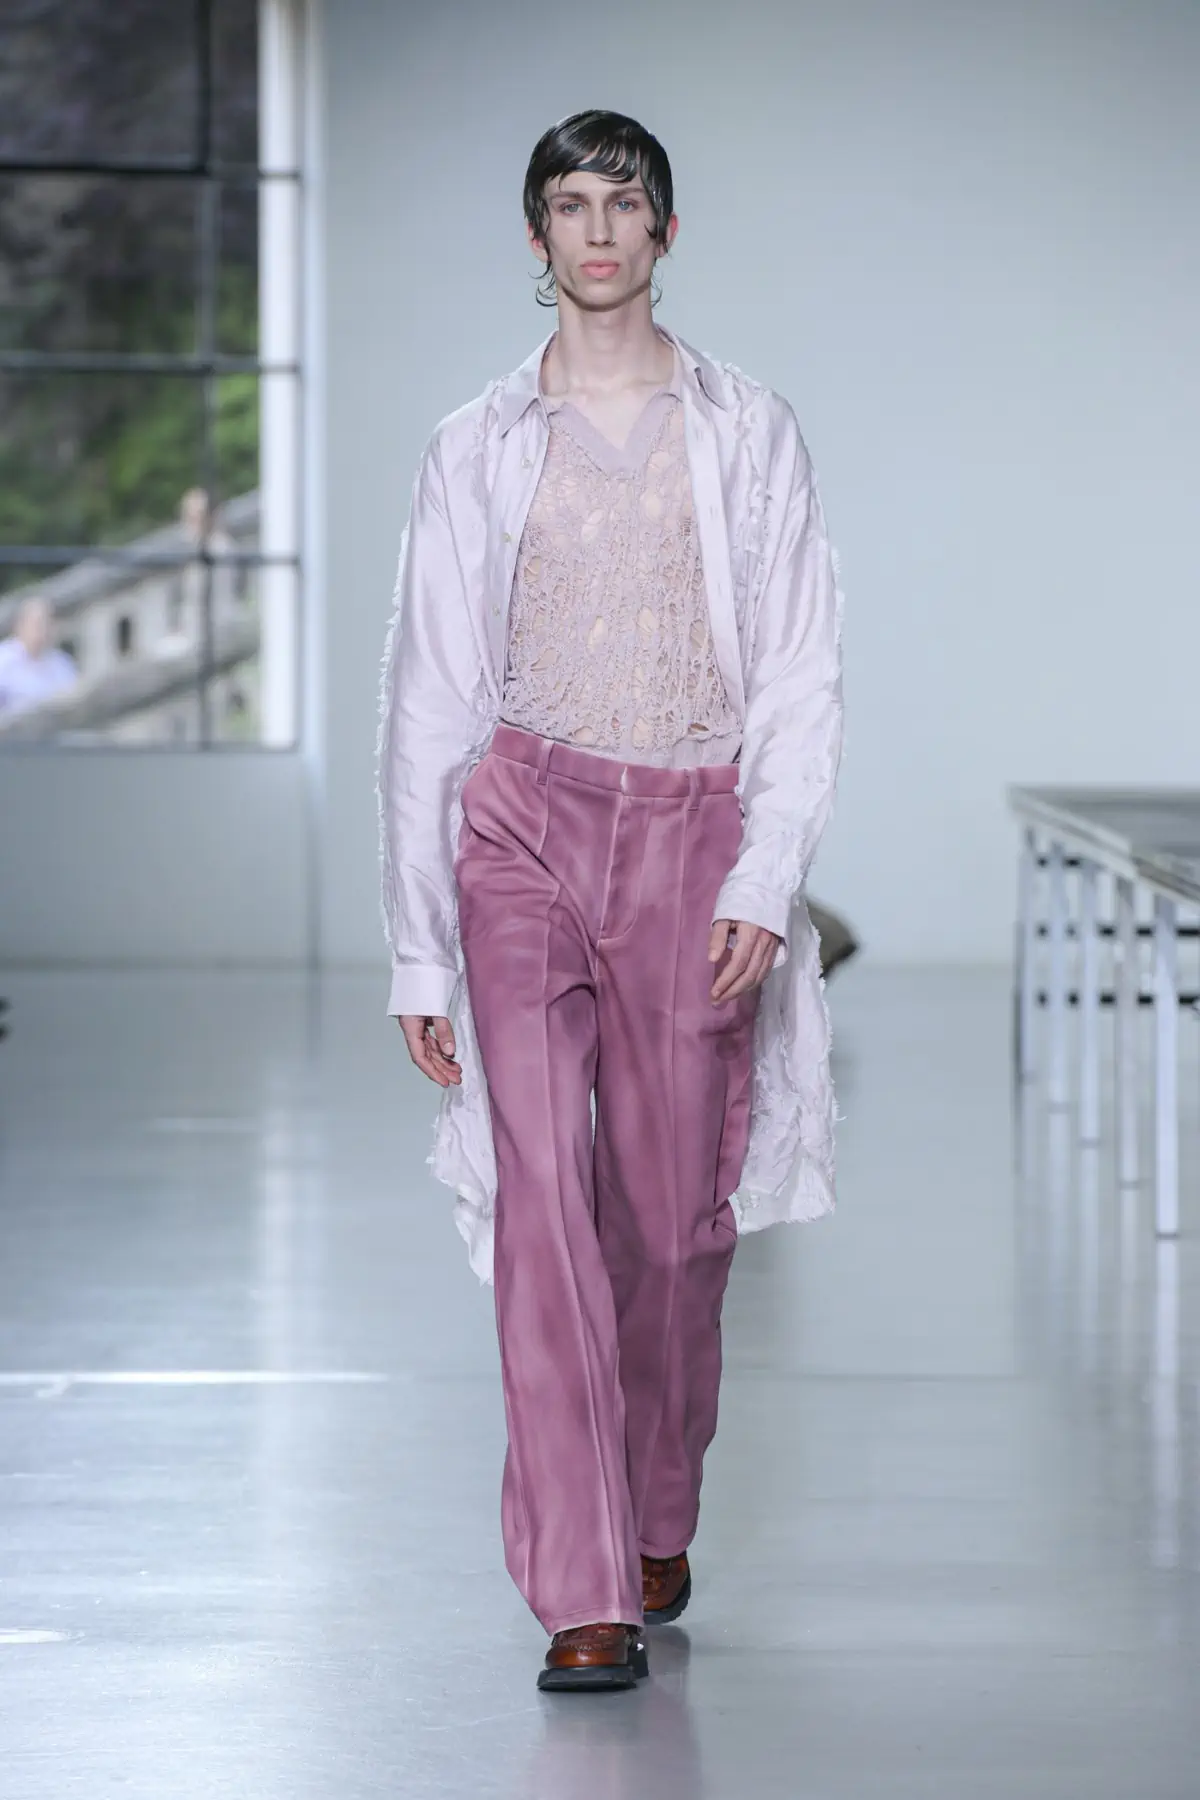 TAAKK Spring 2025 redefines menswear with Japanese-inspired innovation